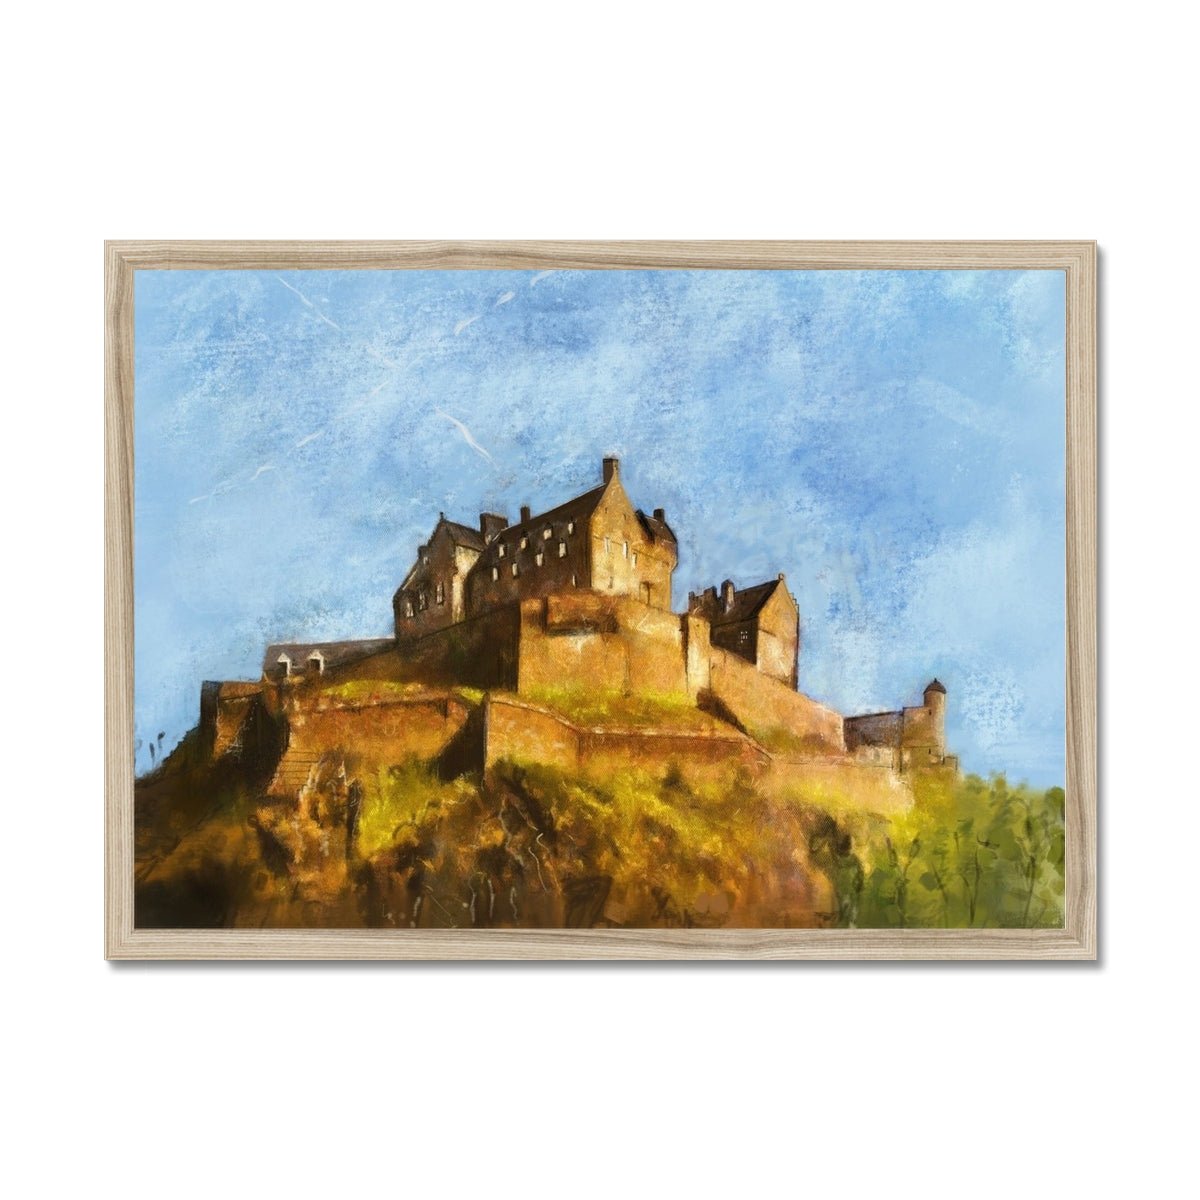 Edinburgh Castle Painting | Framed Prints From Scotland-Framed Prints-Historic & Iconic Scotland Art Gallery-A2 Landscape-Natural Frame-Paintings, Prints, Homeware, Art Gifts From Scotland By Scottish Artist Kevin Hunter